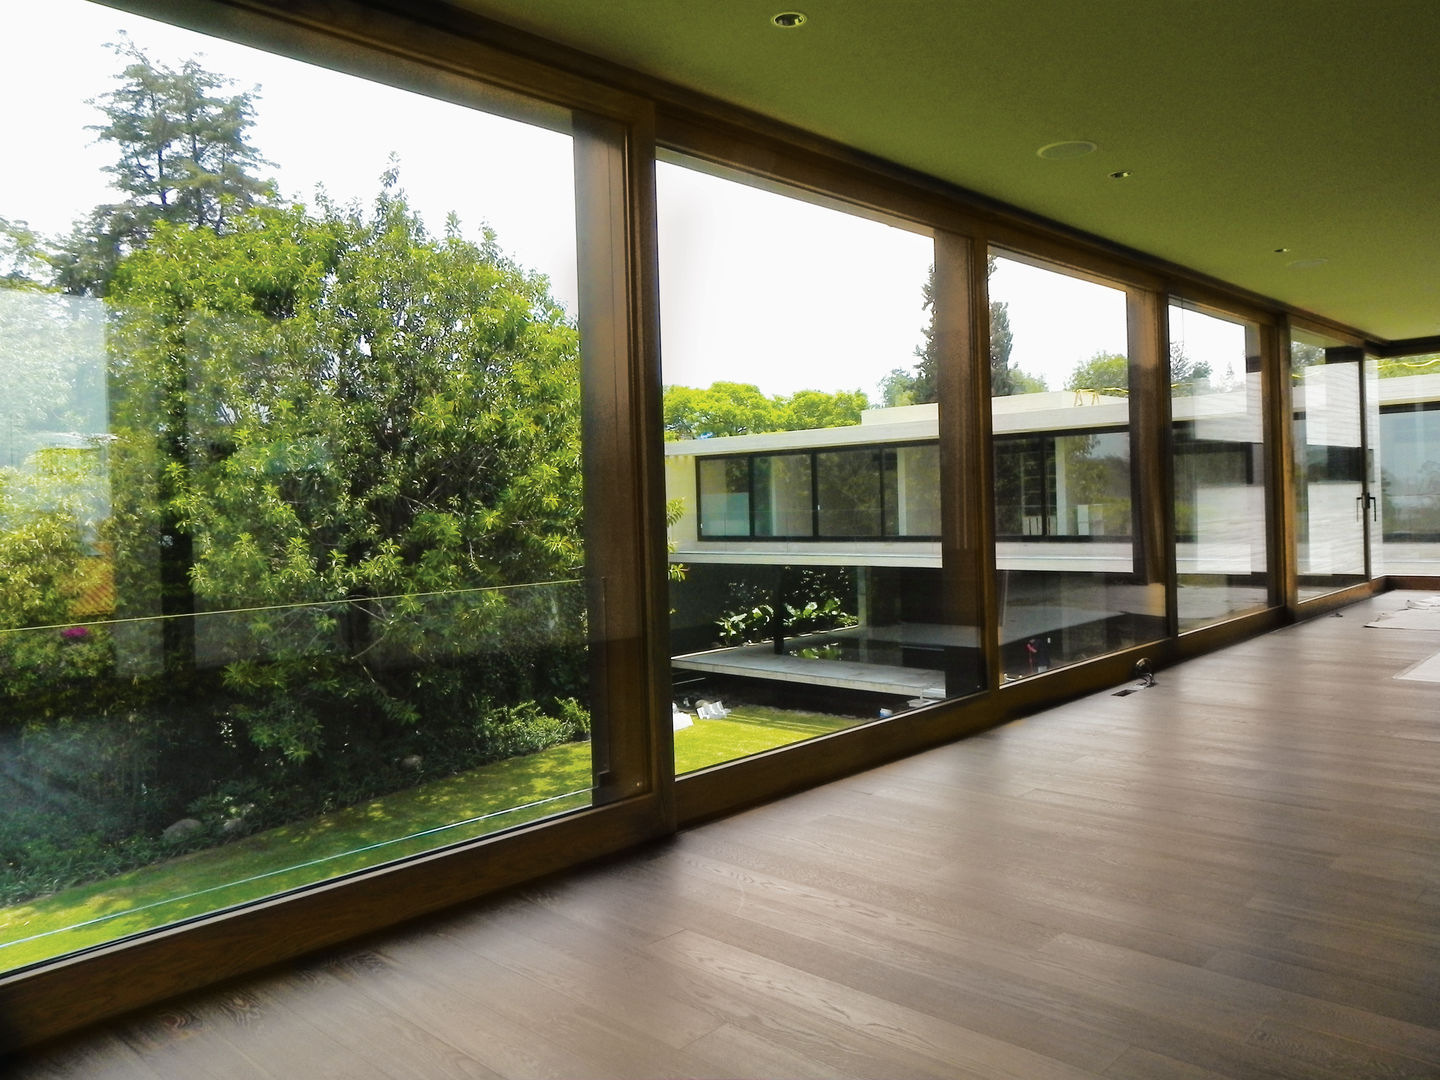 Diseños Elevables, Multivi Multivi Modern windows & doors